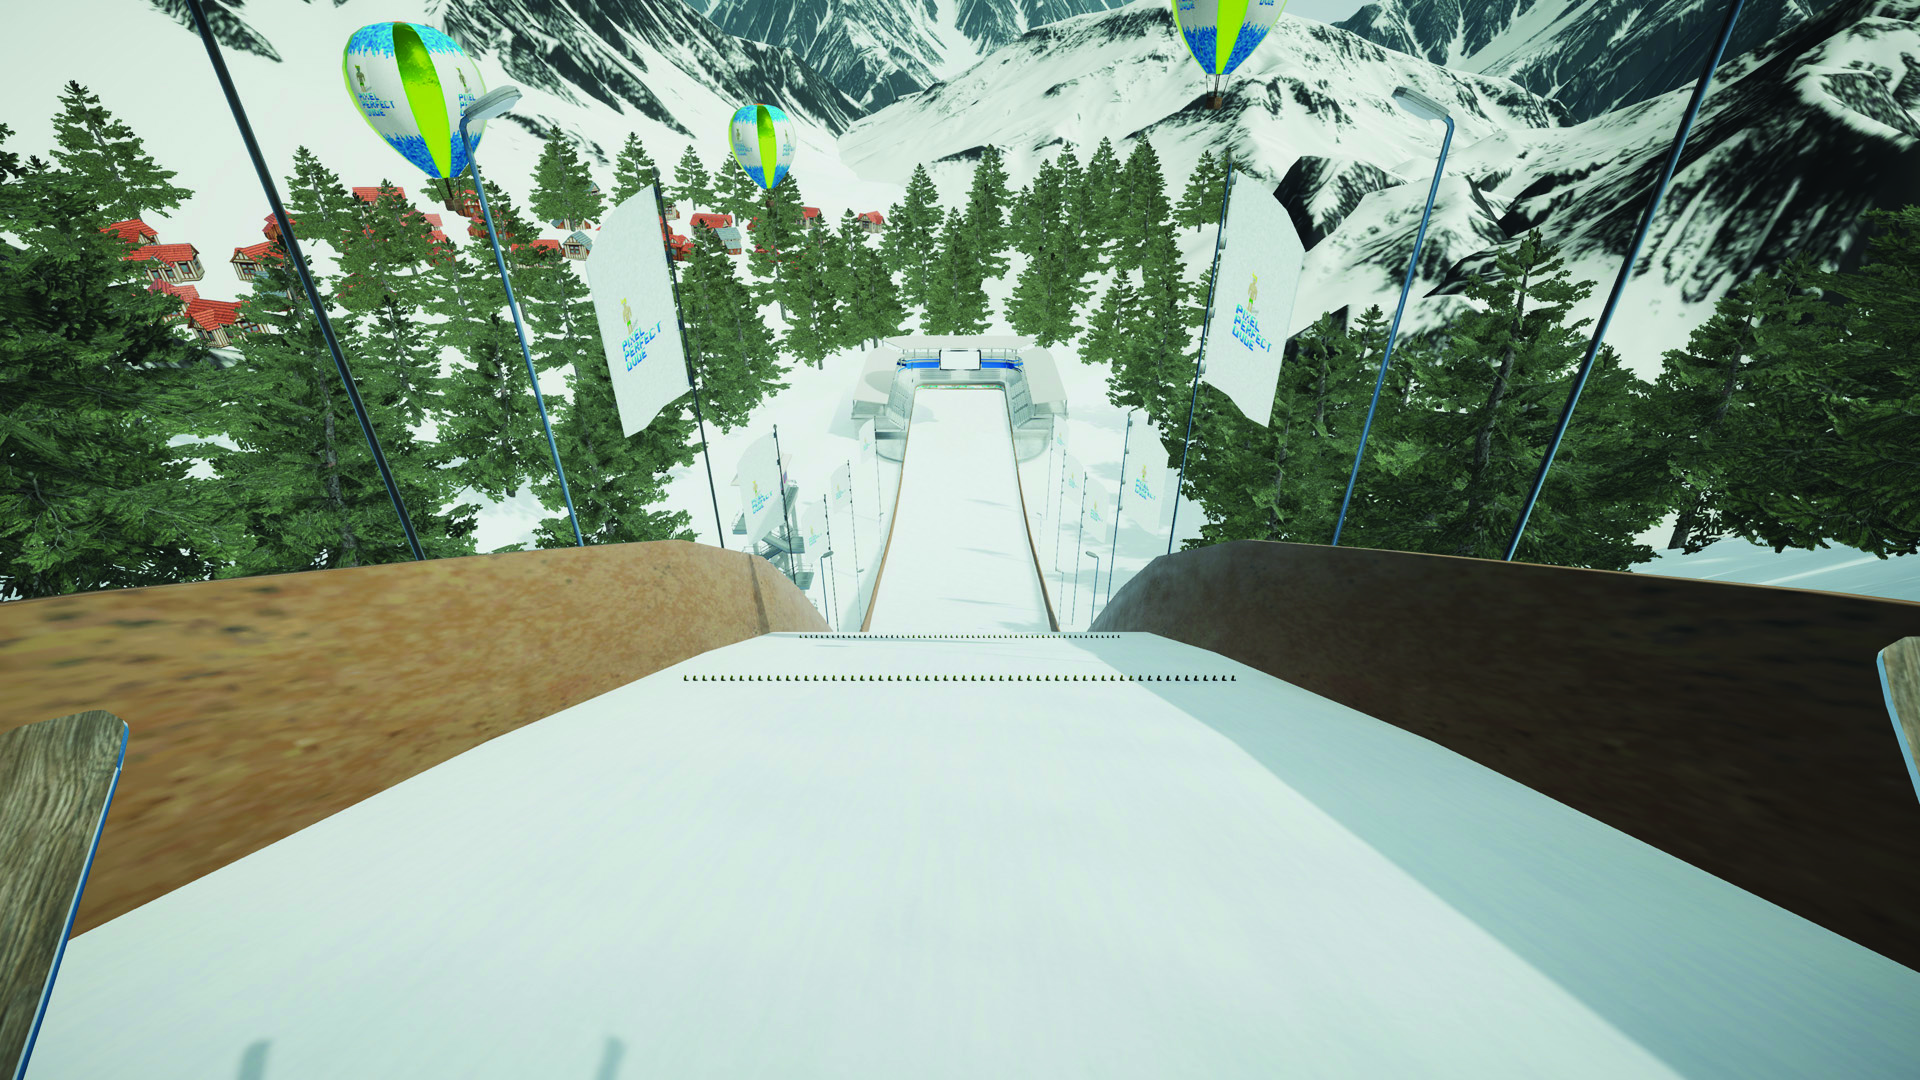 Symulator skoków narciarskich VR